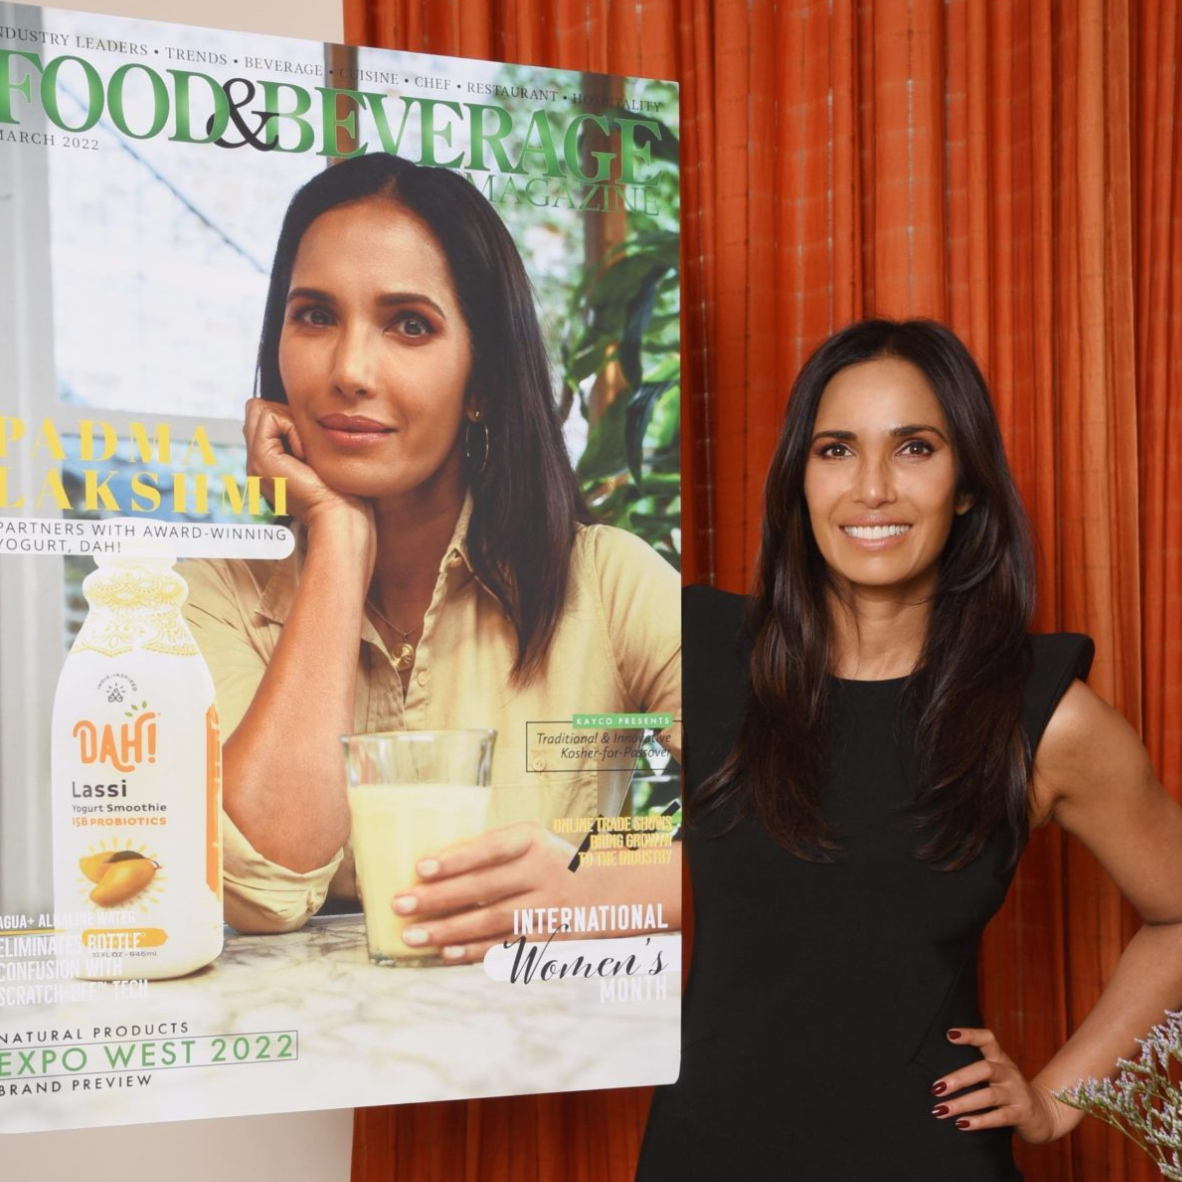 Women Fitness: Padma Lakshmi on March 2022 Cover of Food & Beverage Magazine with DAH! yogurt